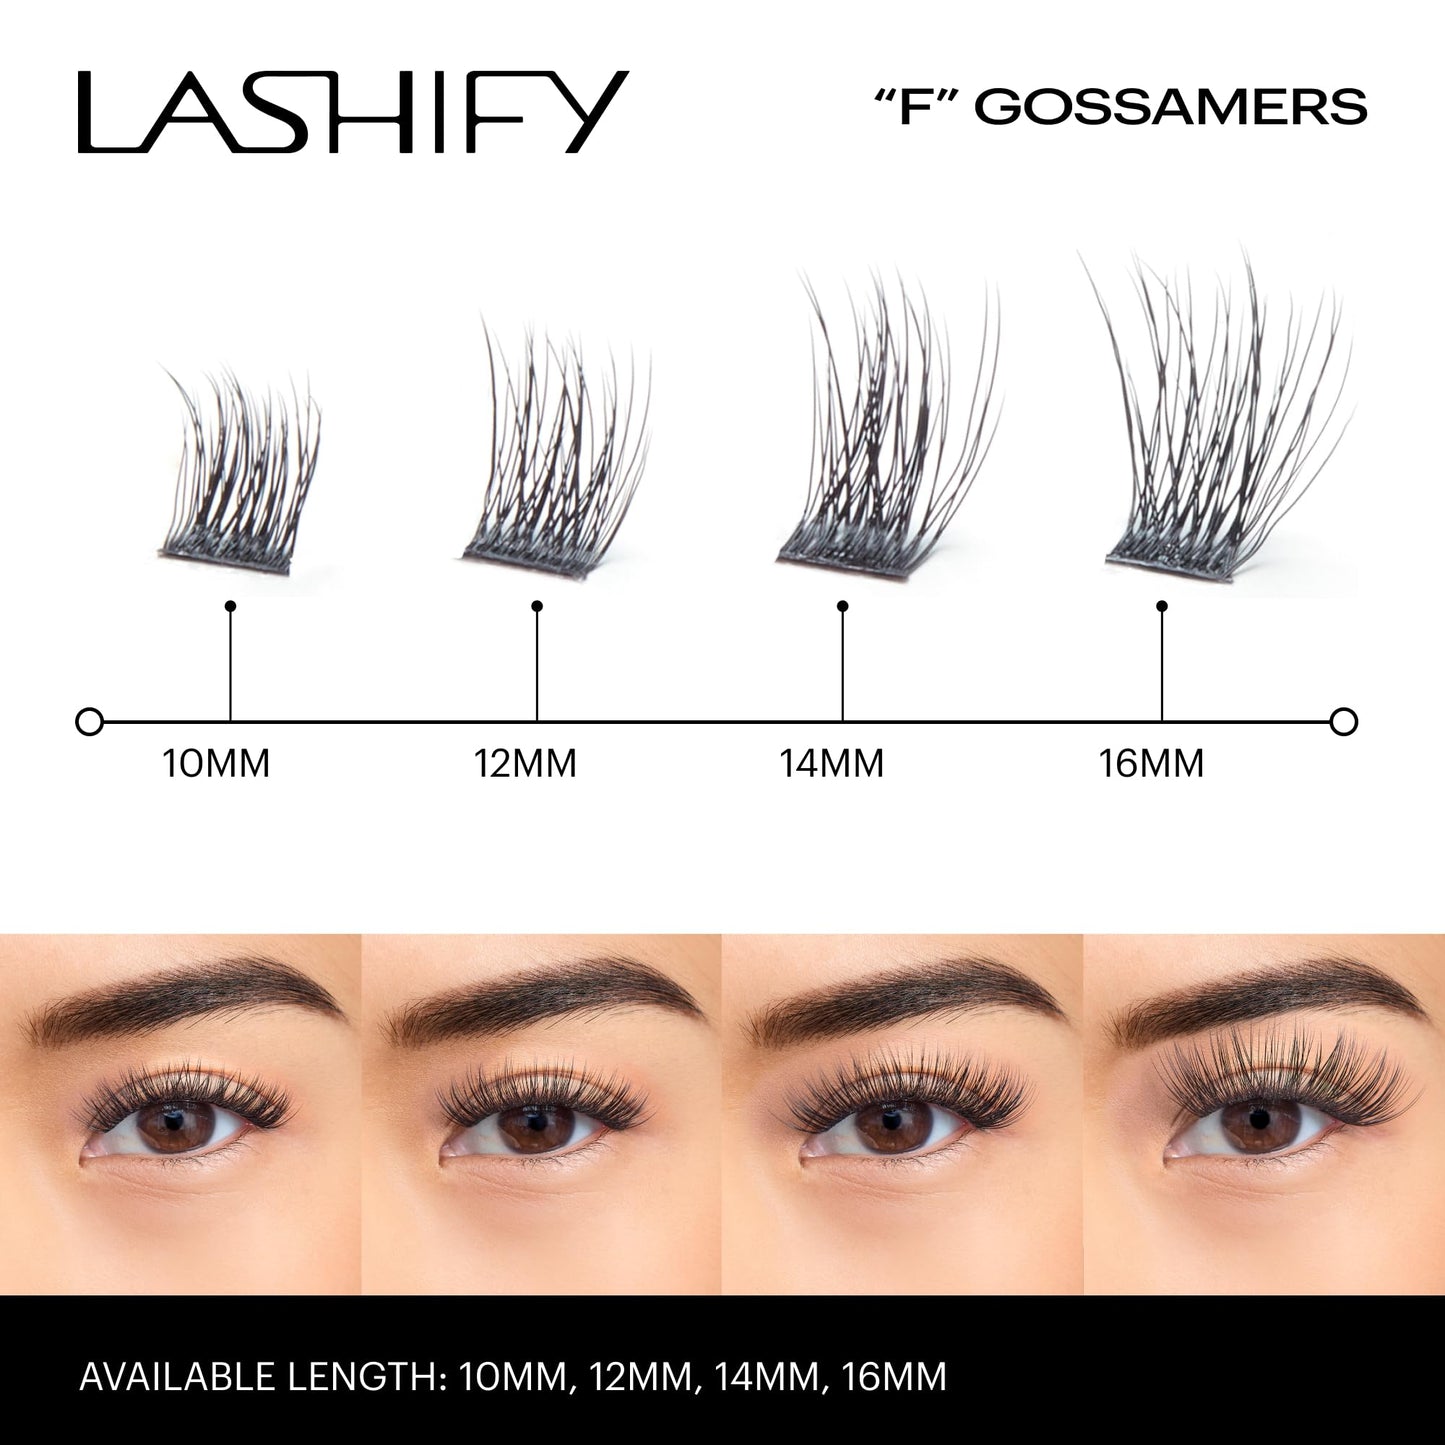 Lashify Fluffy 12mm Gossamer Eyelash Extensions Refill, Black, Easy DIY False Lashes To Add Fullness and Dimension